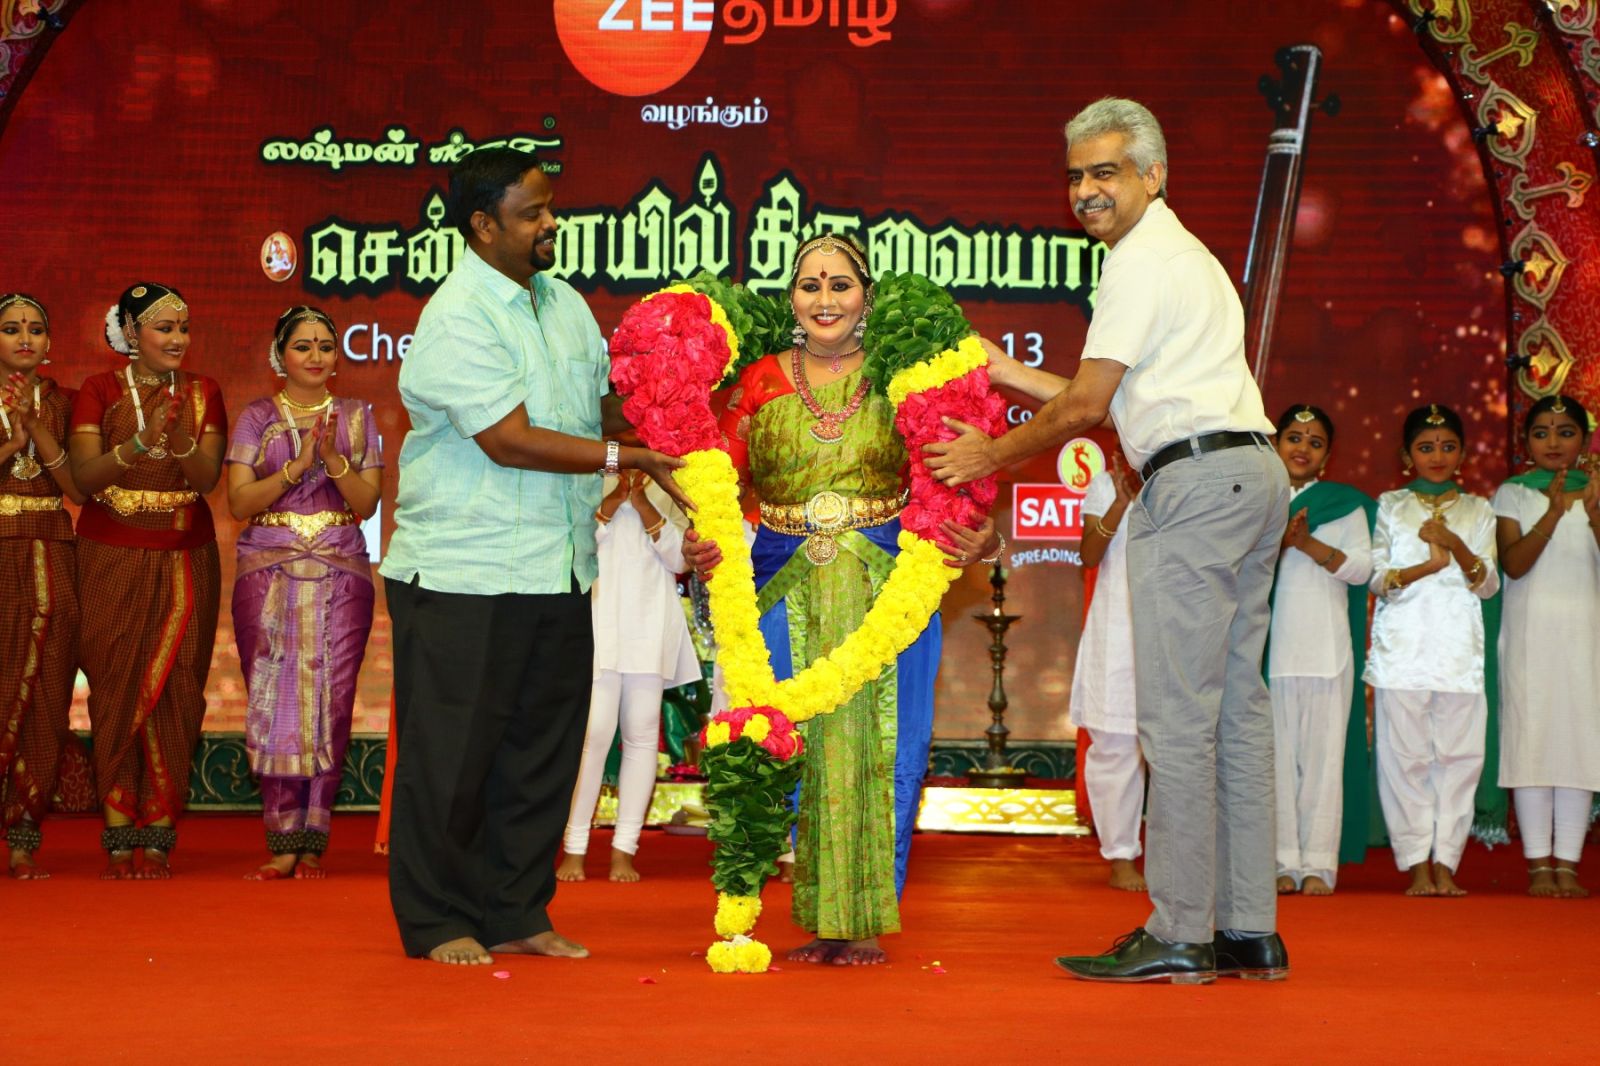 Chennaiyil Thiruvaiyaru Season 13 Day 2 (19th December) Stills (39)